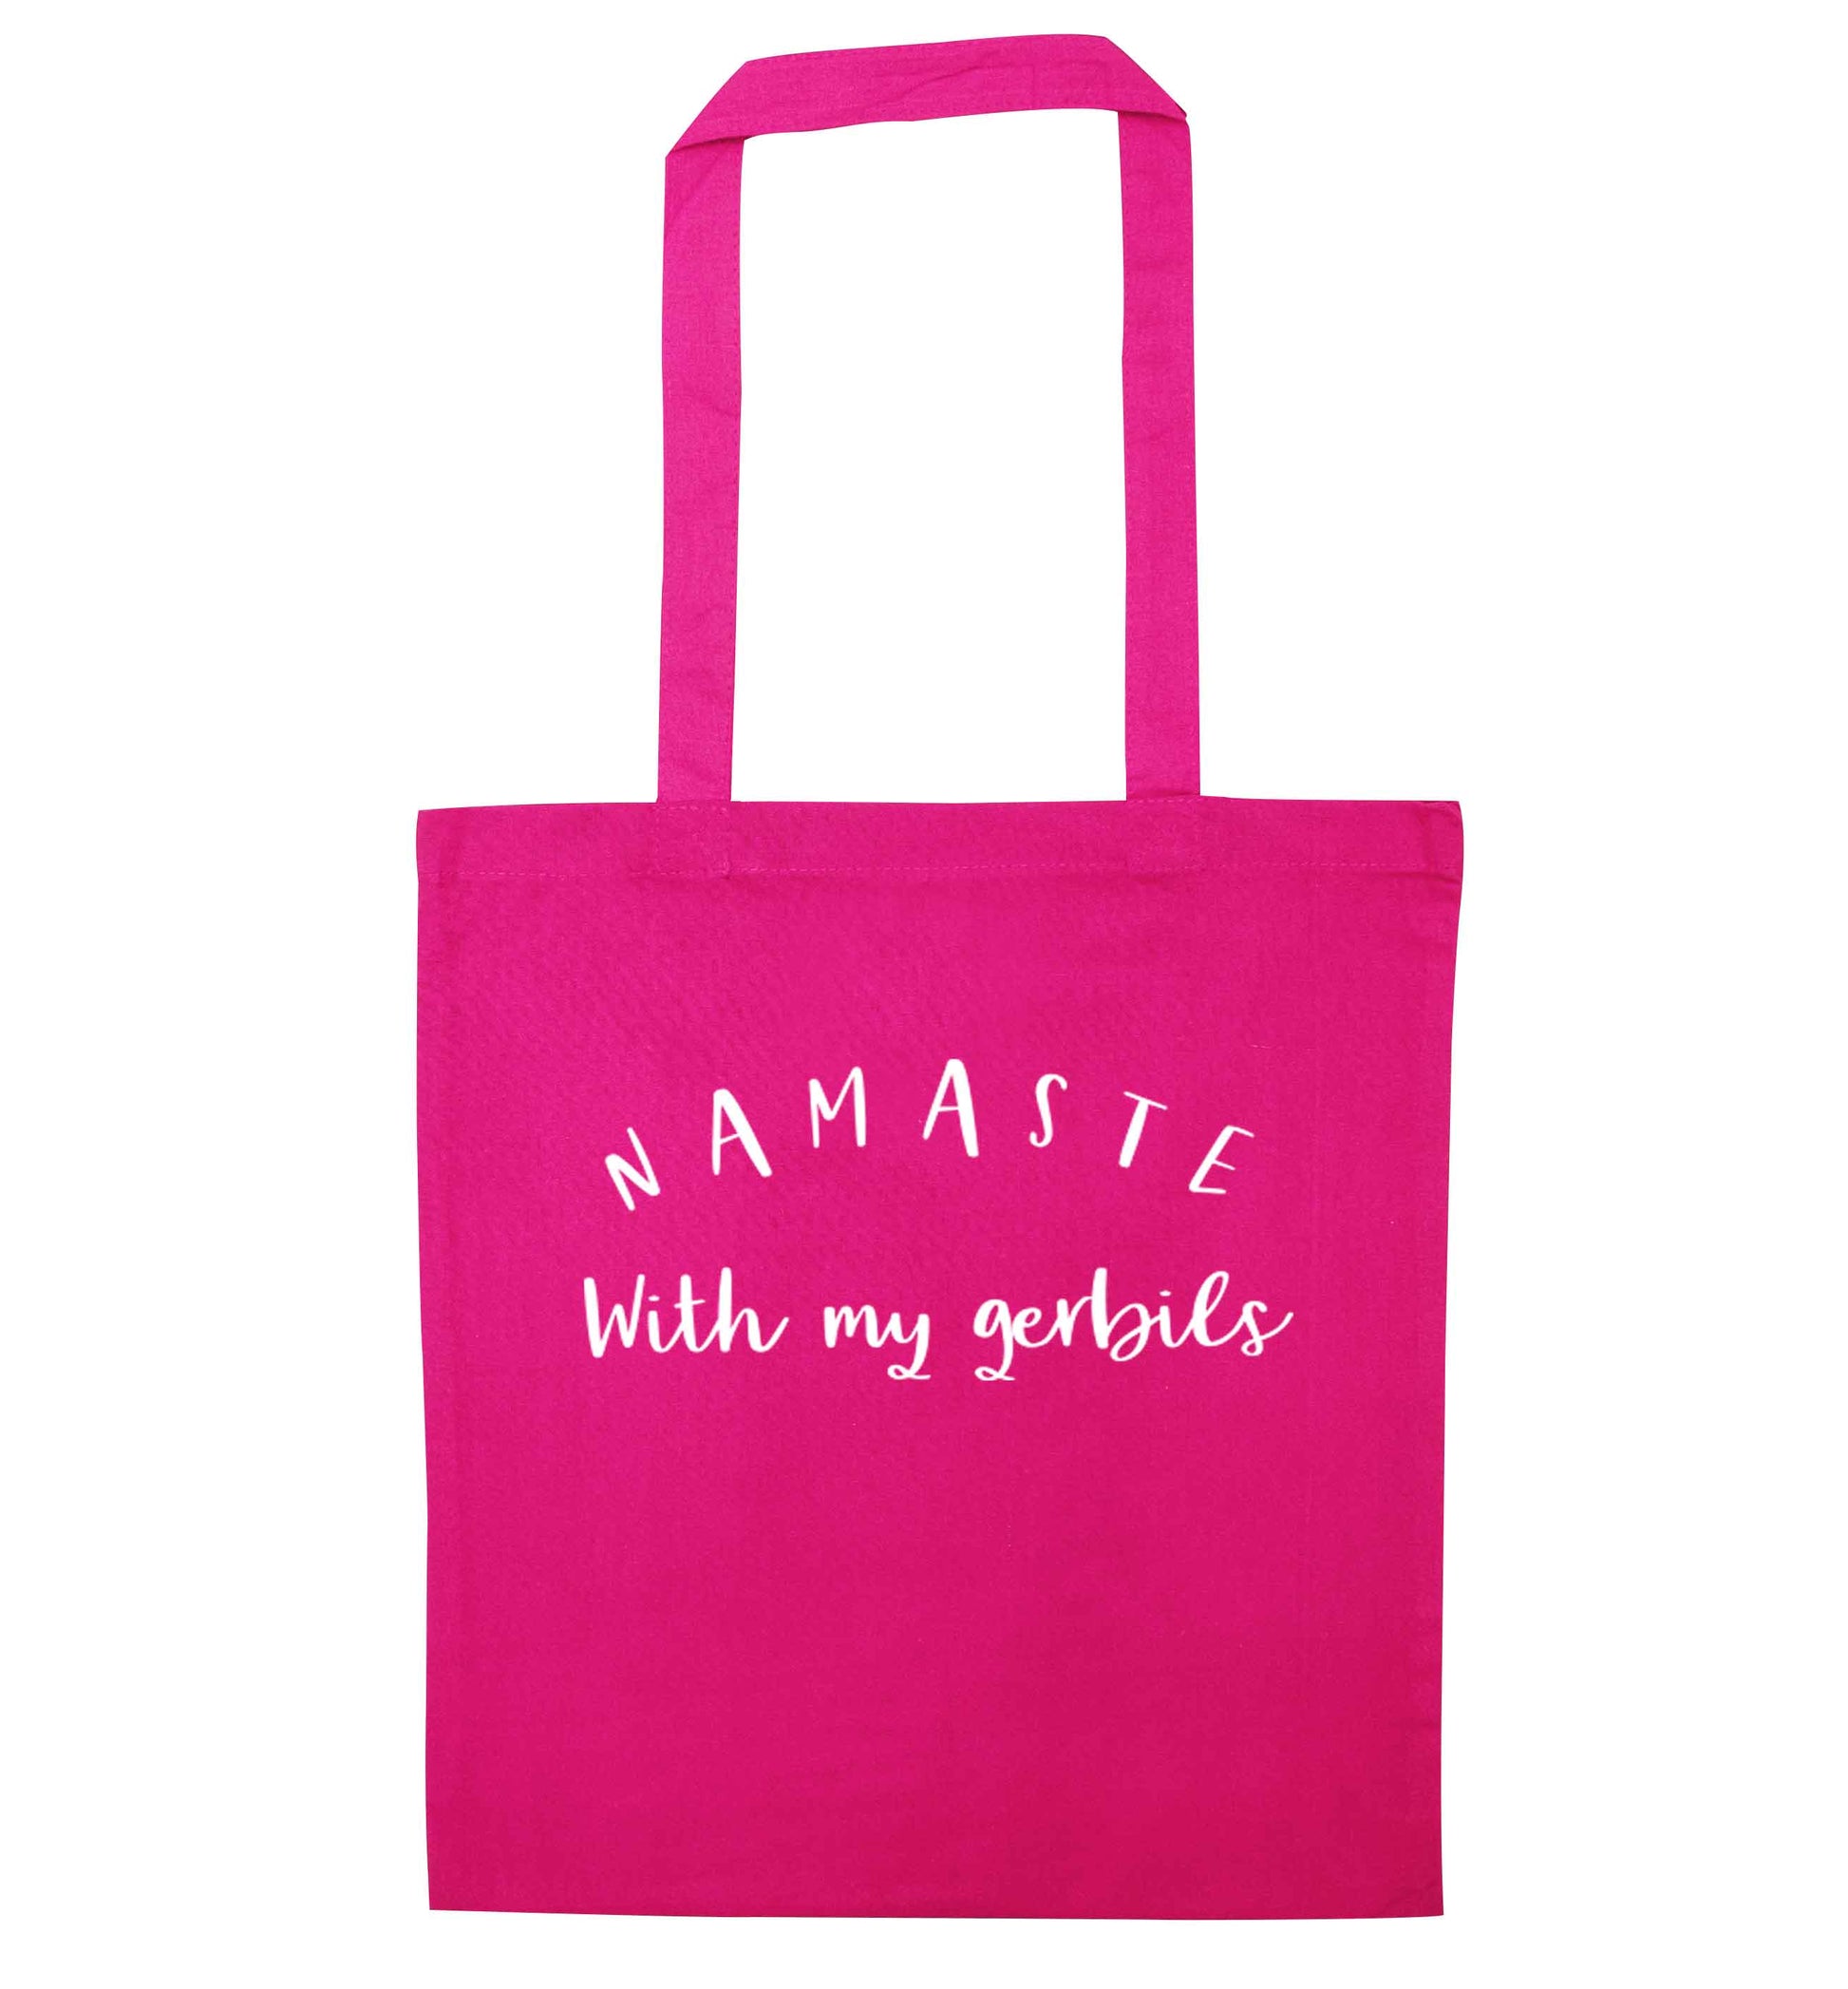 Namaste with my gerbils pink tote bag